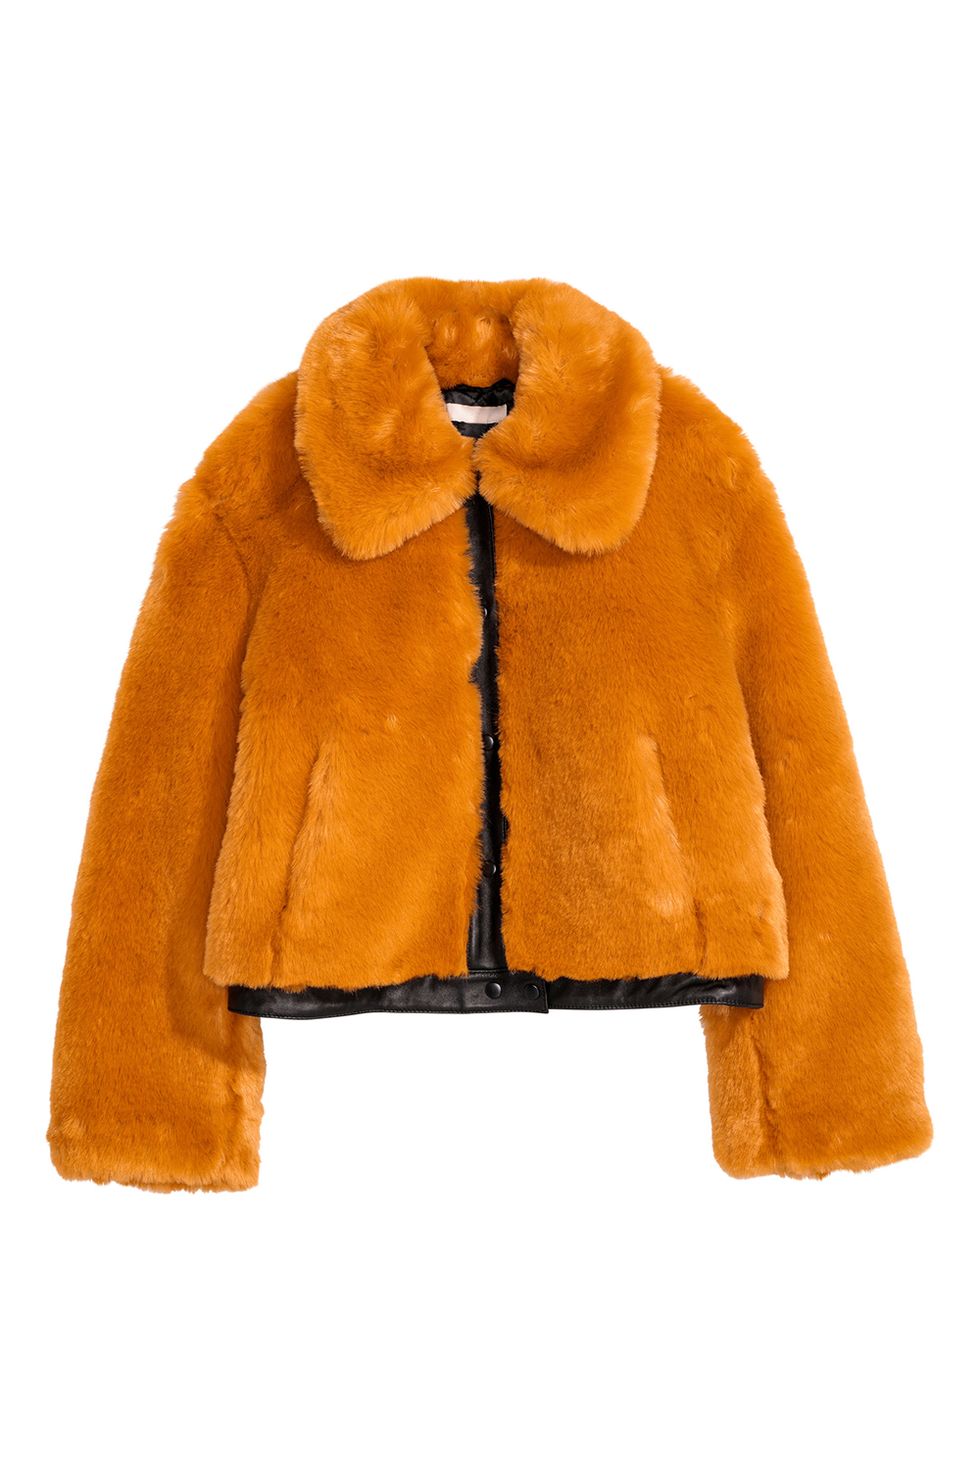 Fur clothing, Clothing, Fur, Outerwear, Orange, Jacket, Yellow, Coat, Sleeve, Hood, 